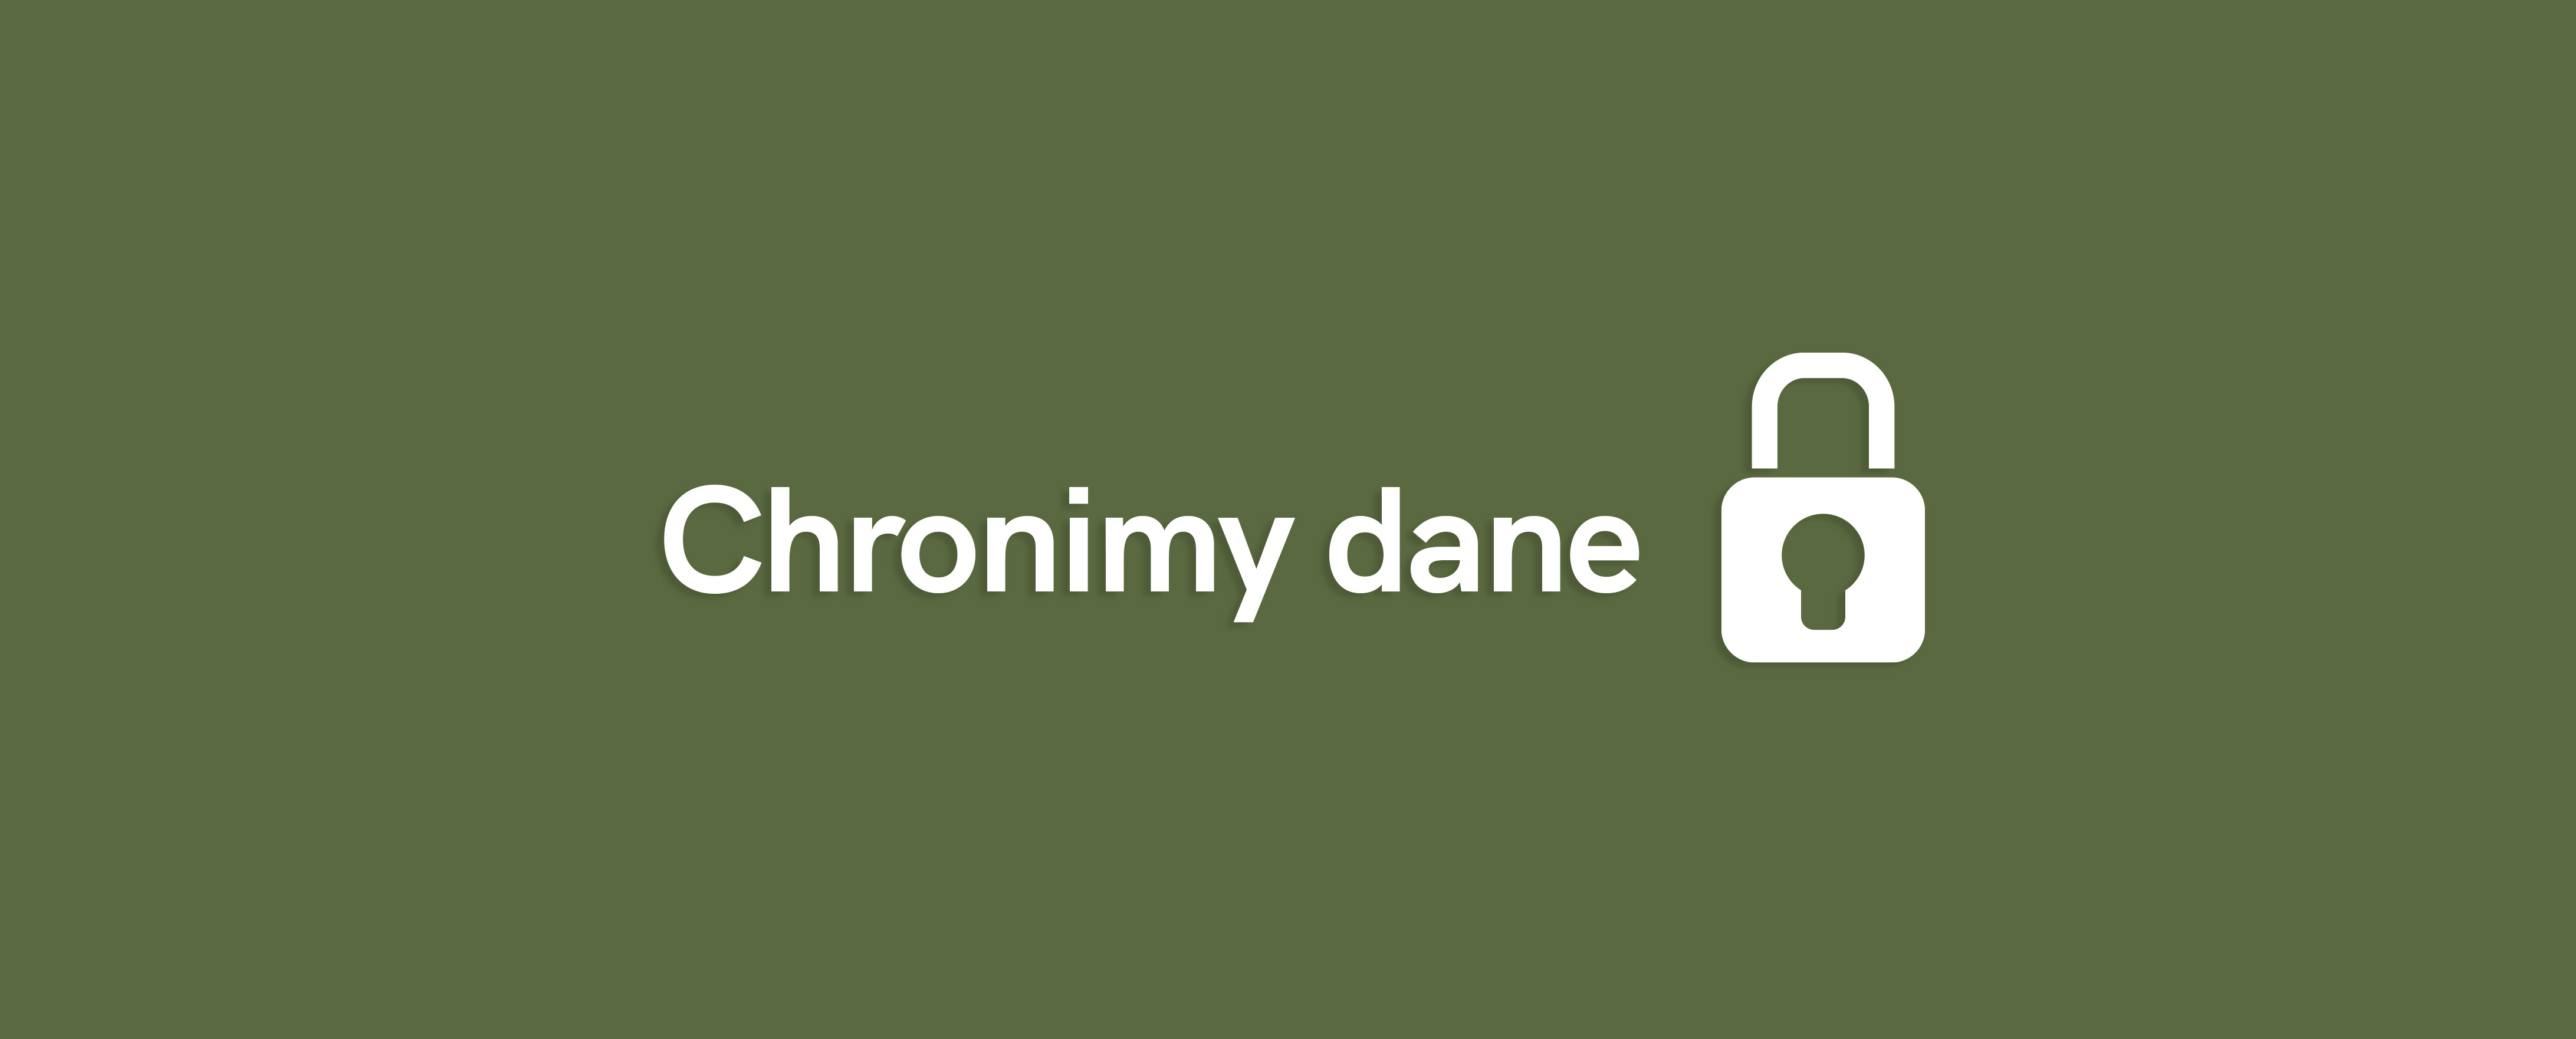 chronimy_dane